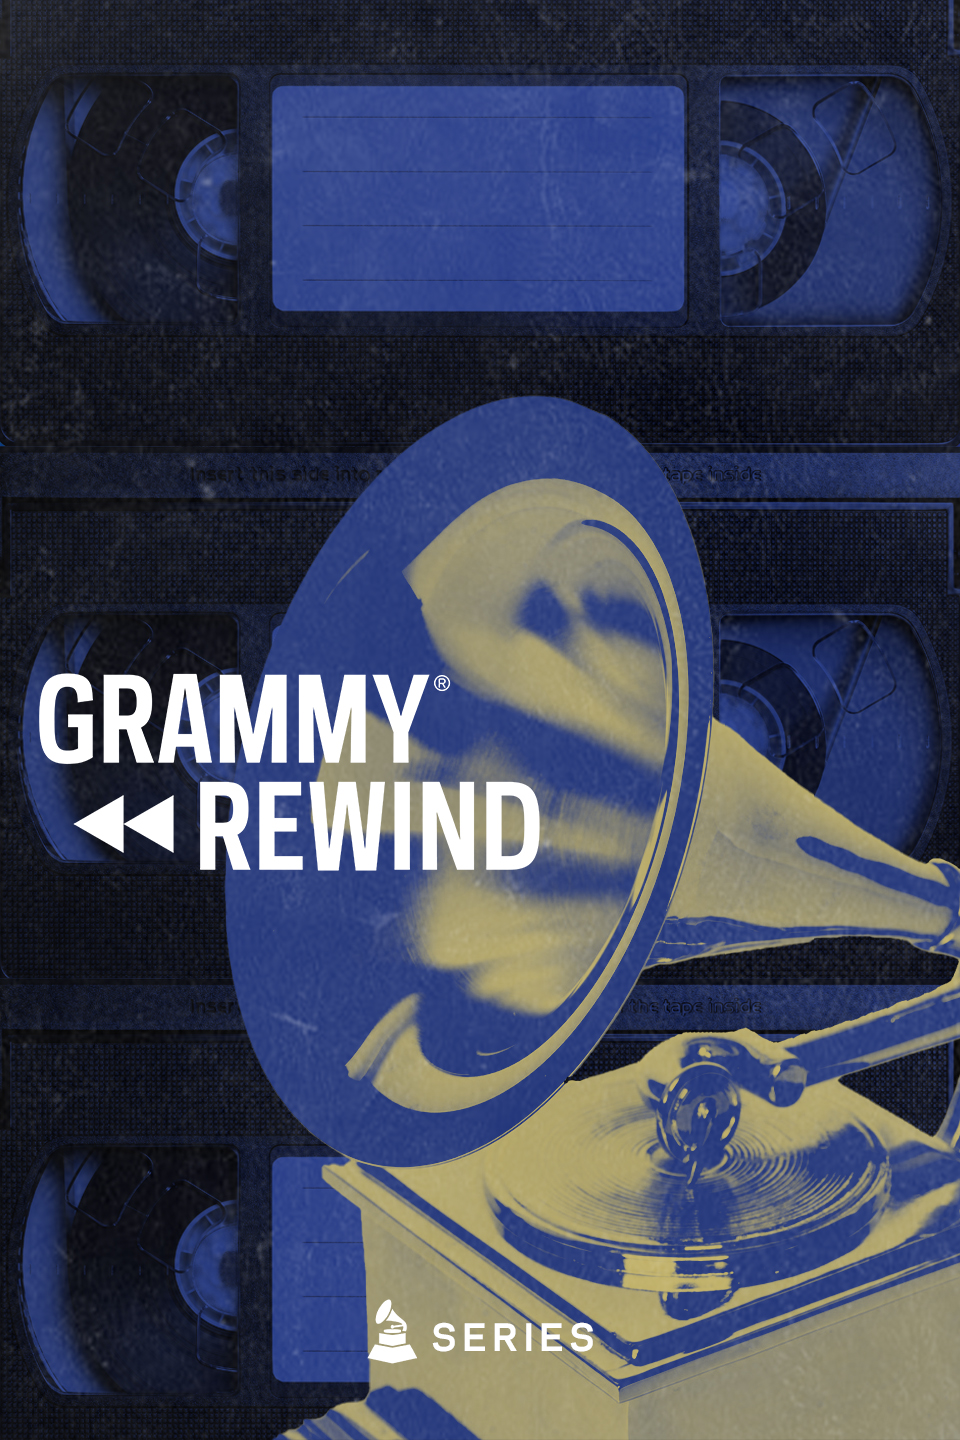 Watch Eminem Win Best Rap Album For 'The Marshall Mathers LP' In 2001 | GRAMMY Rewind